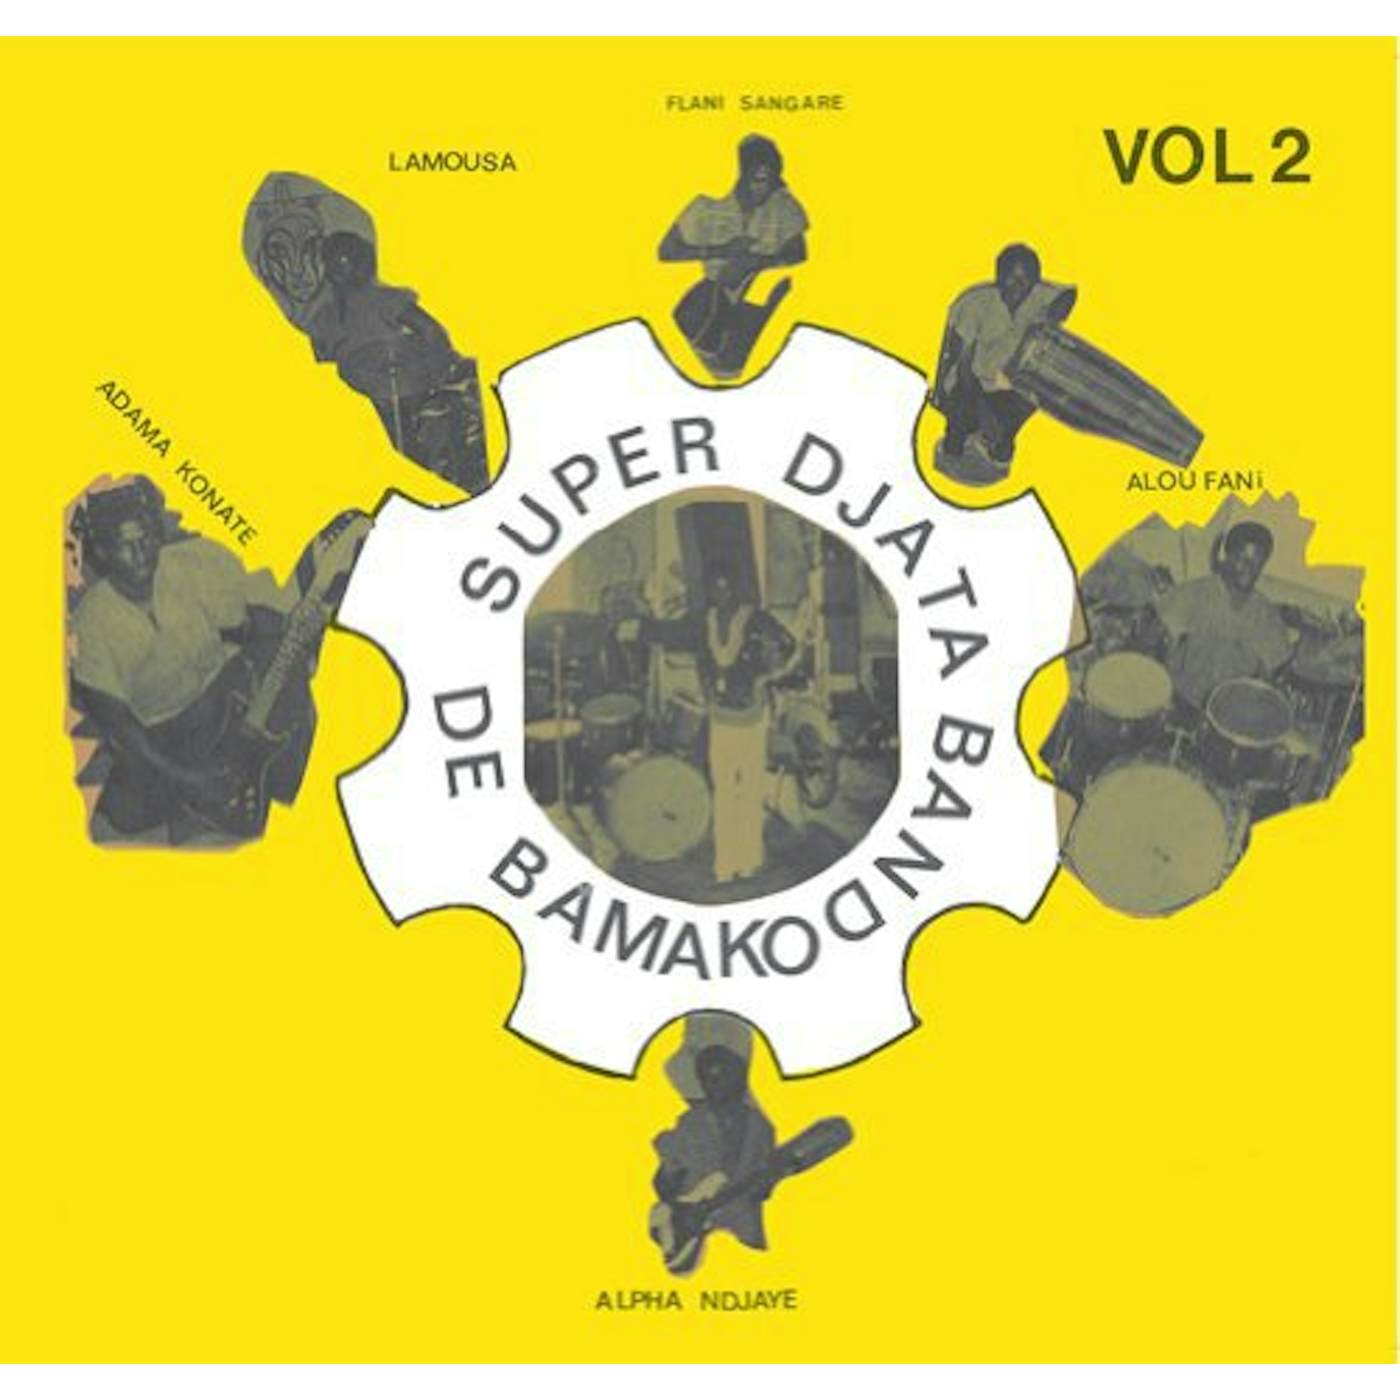 Super Djata Band De Bamako YELLOW 2 Vinyl Record